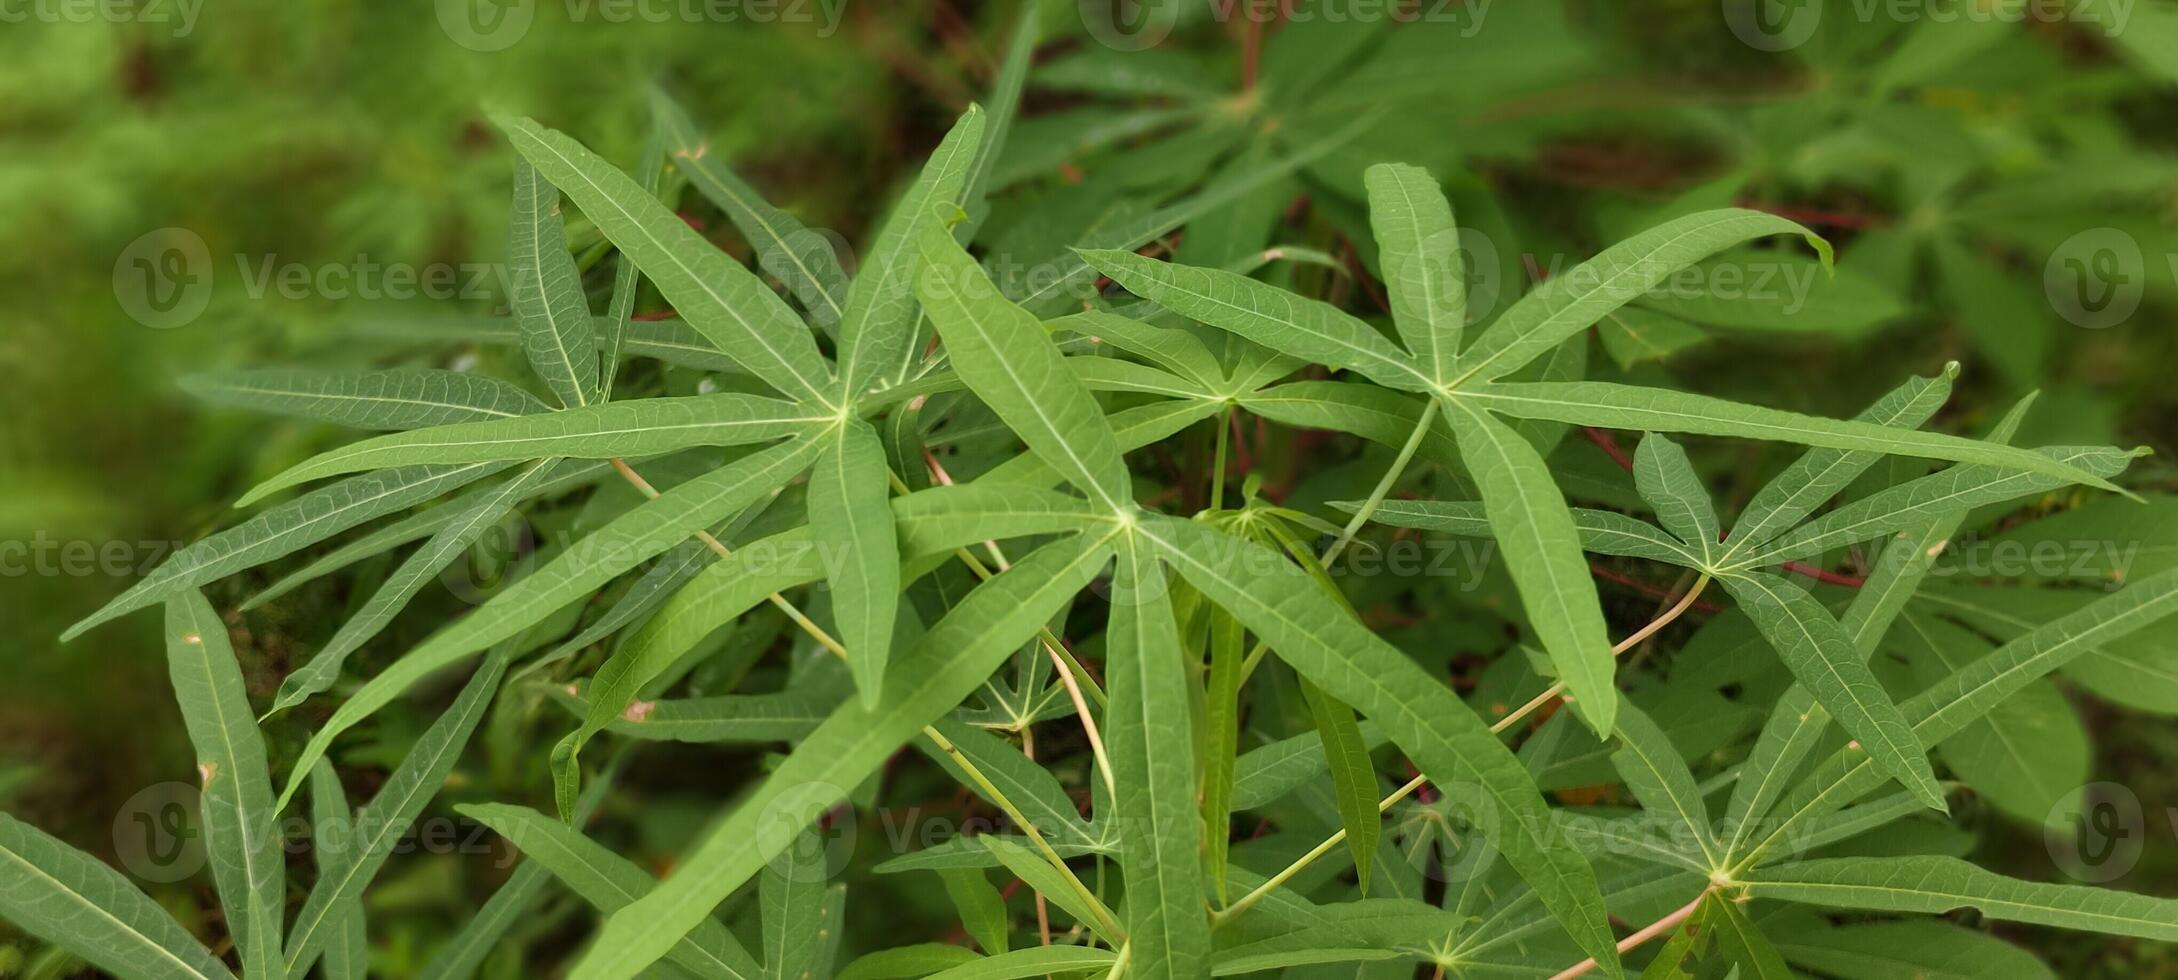 cassava leaves in the garden photo